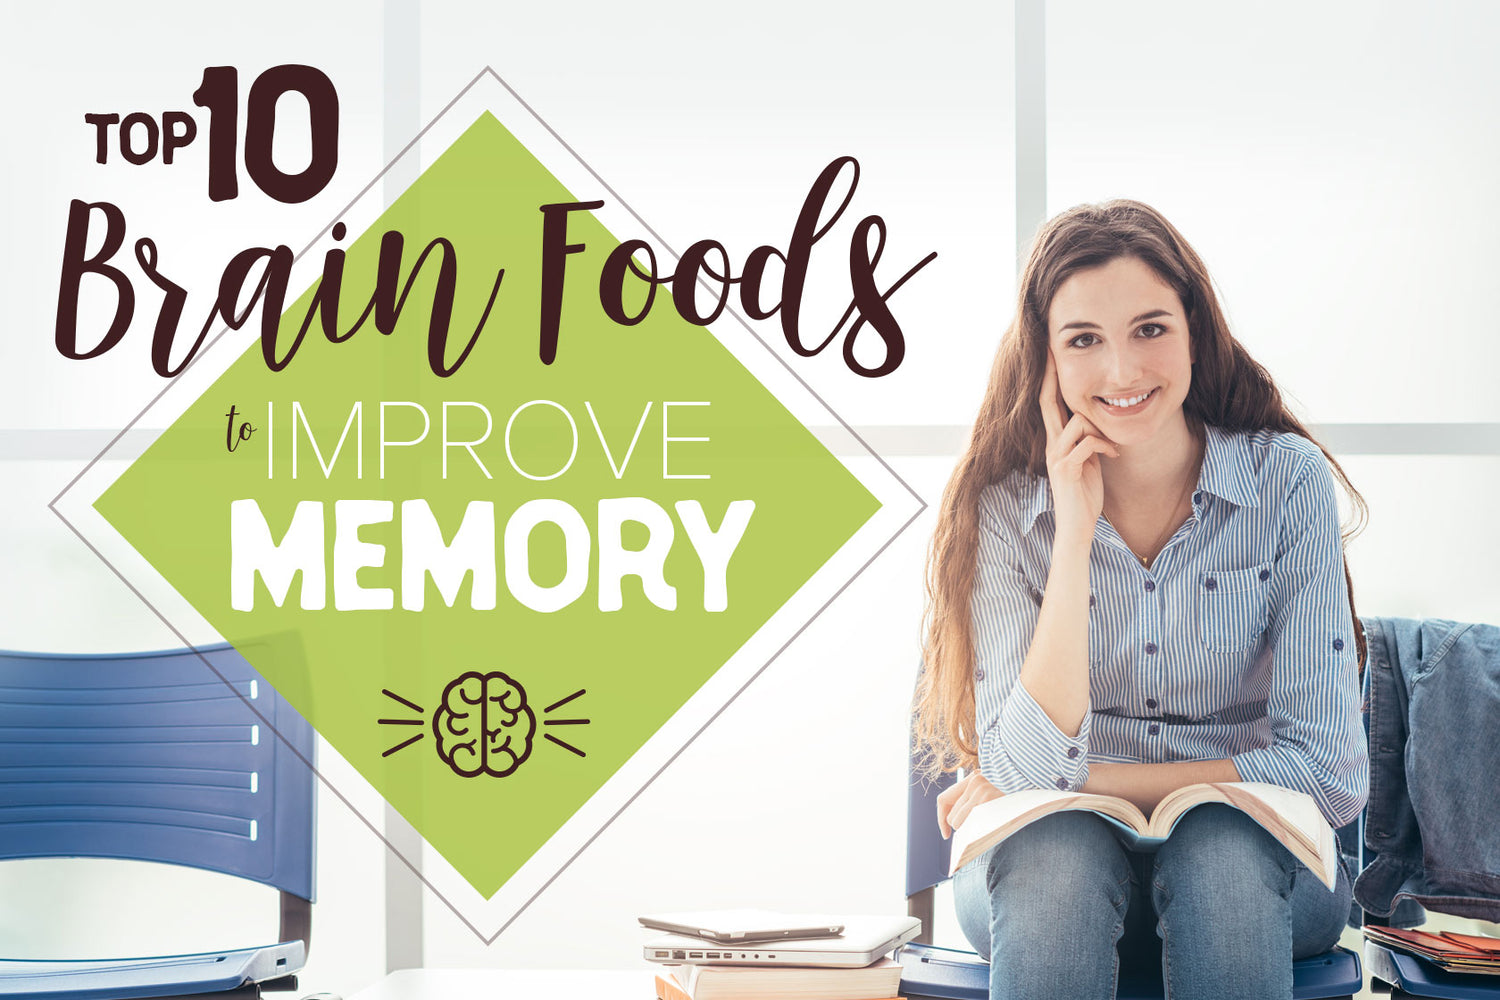 Top 10 Brain Foods to Improve Memory